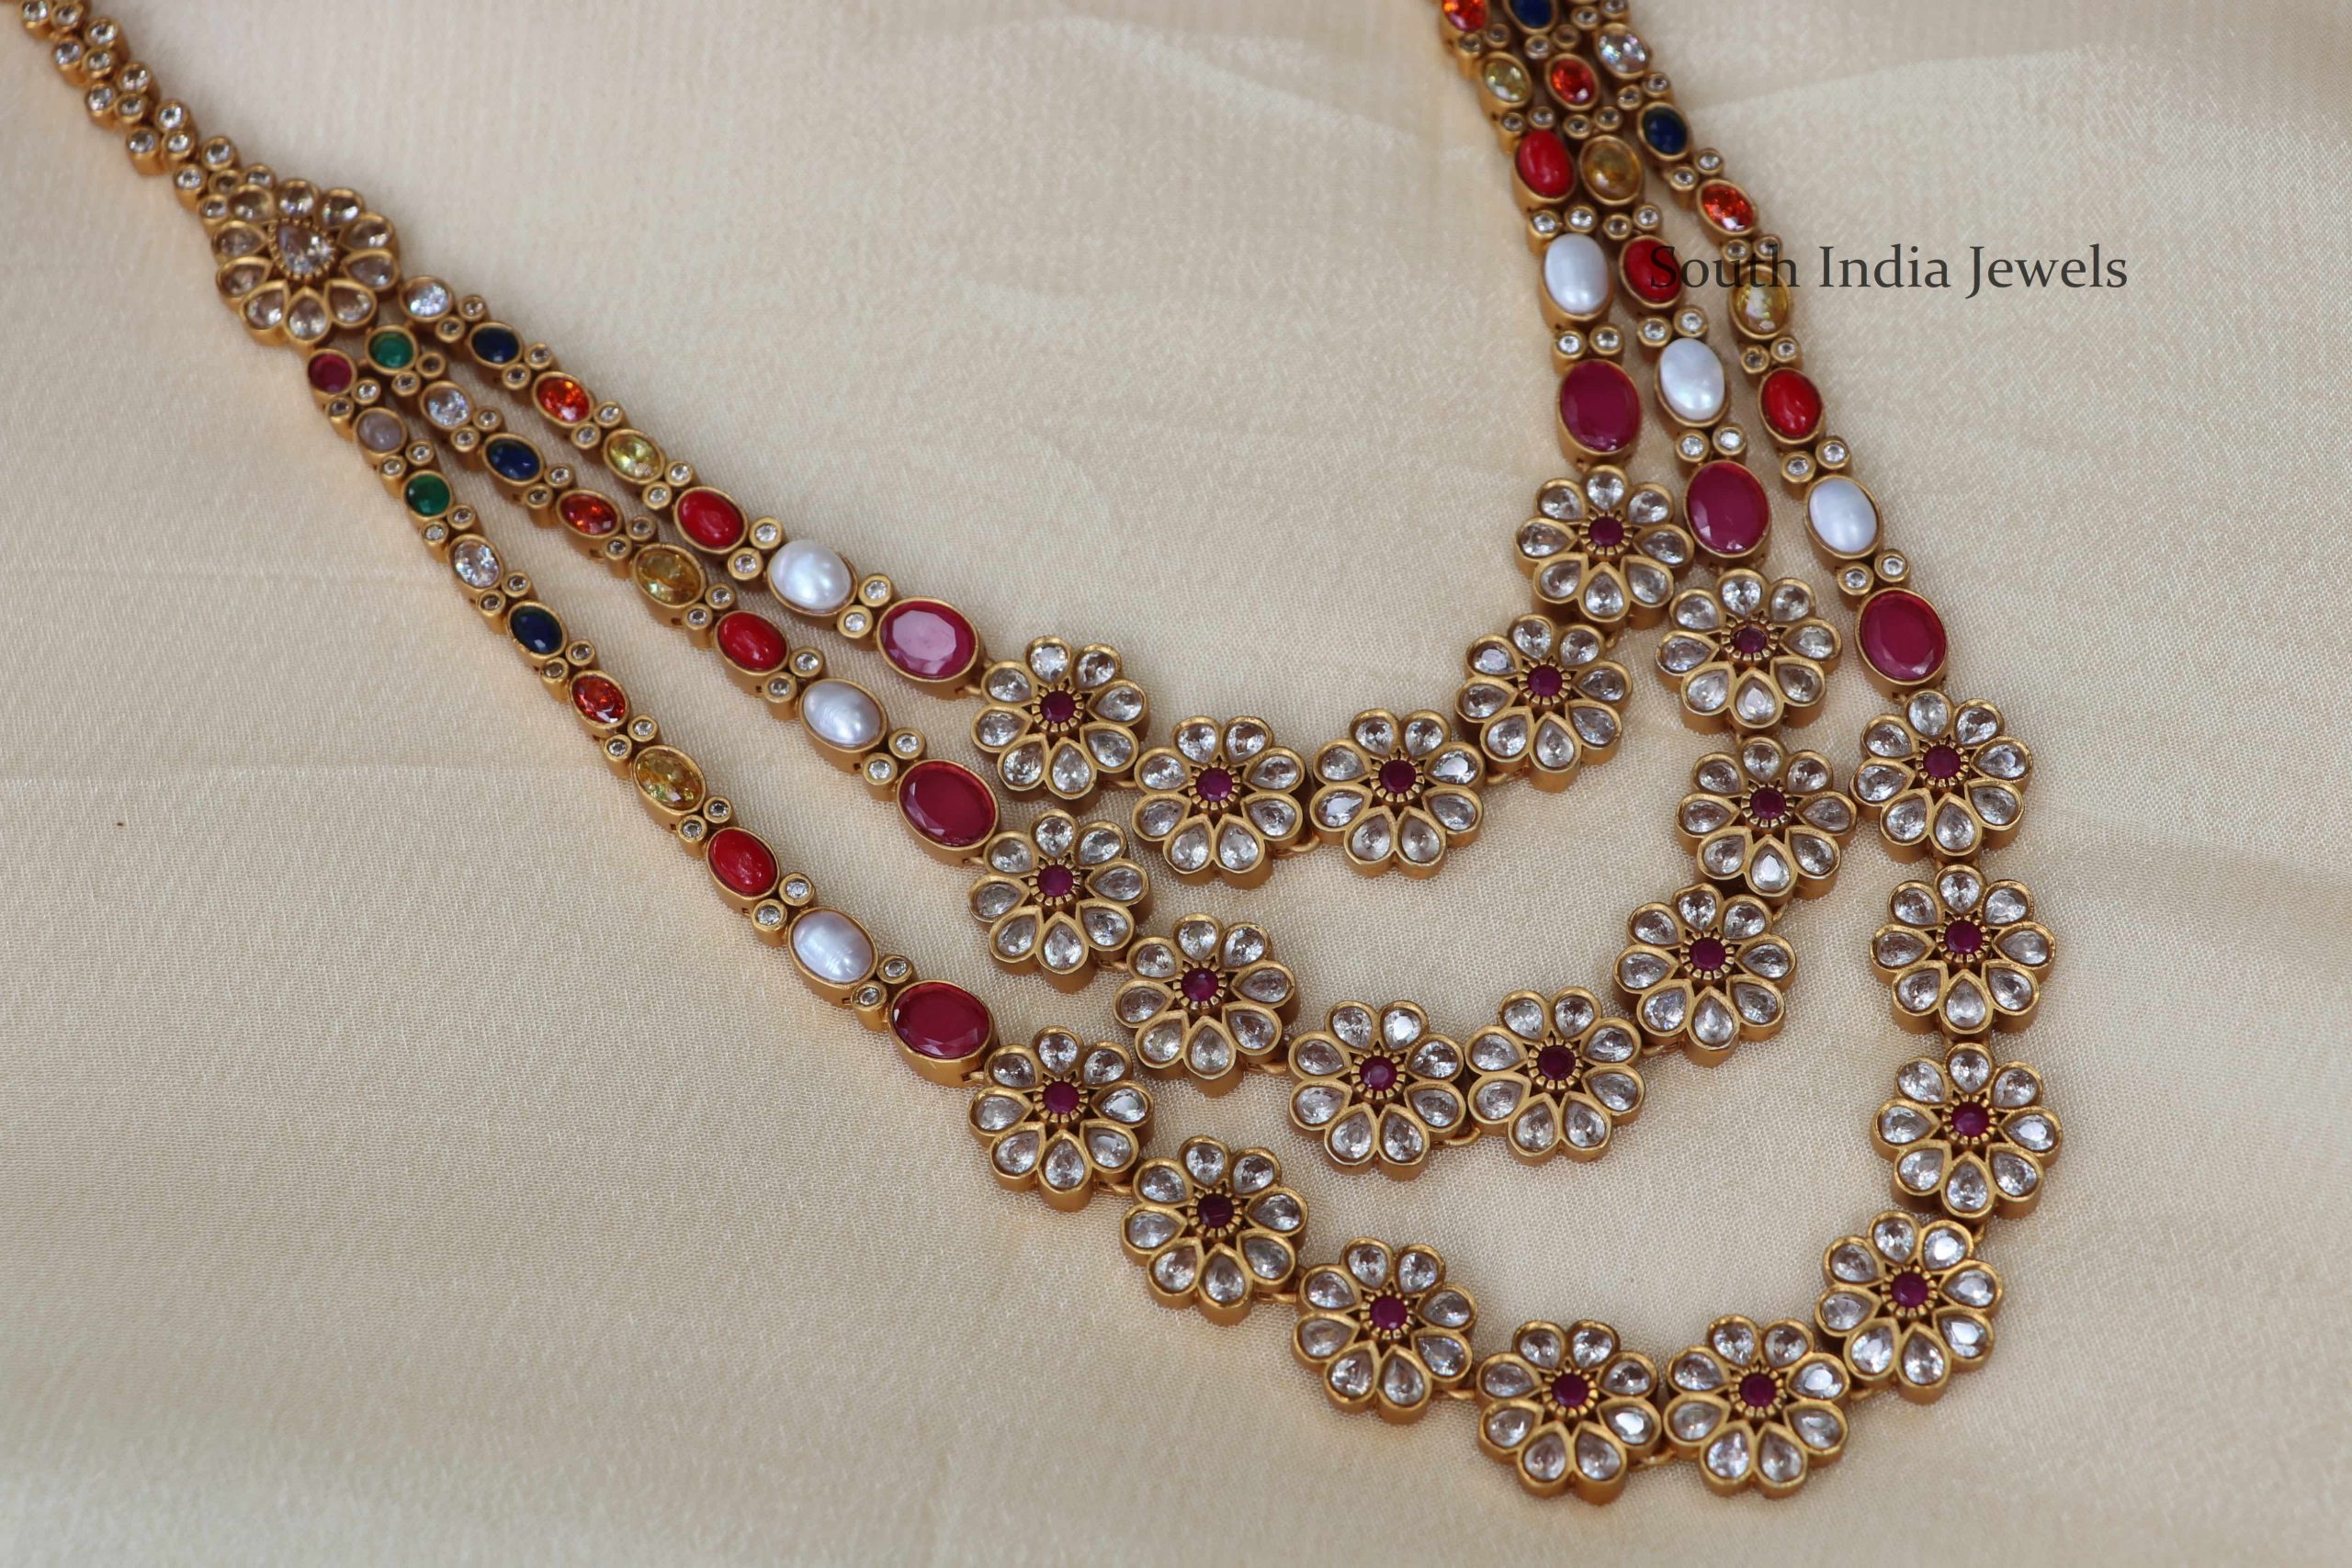 Beautiful Navarathna Necklace - South India Jewels